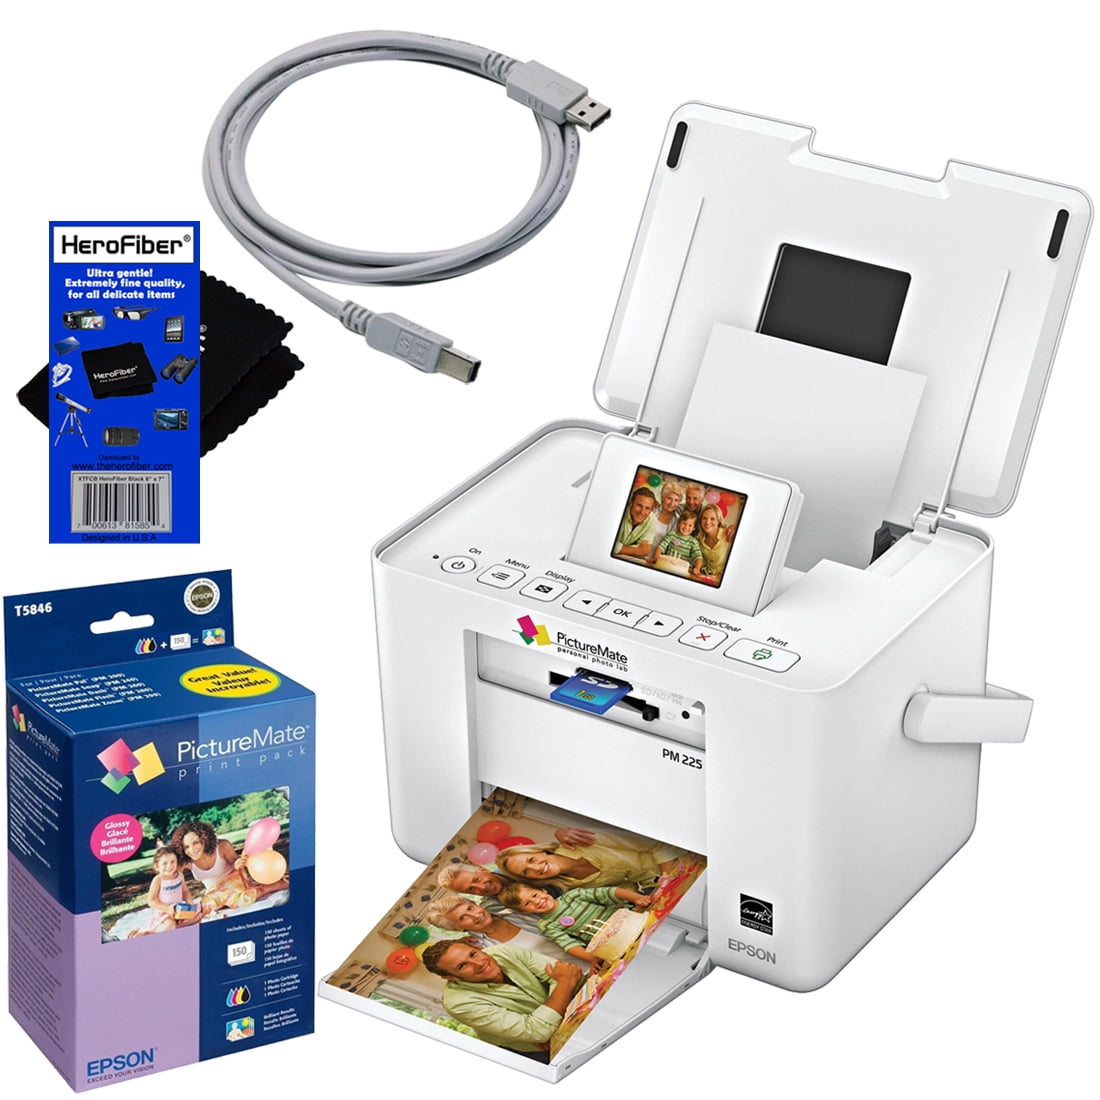  Epson  PM225 PictureMate Charm Compact  Photo Inkjet Printer  